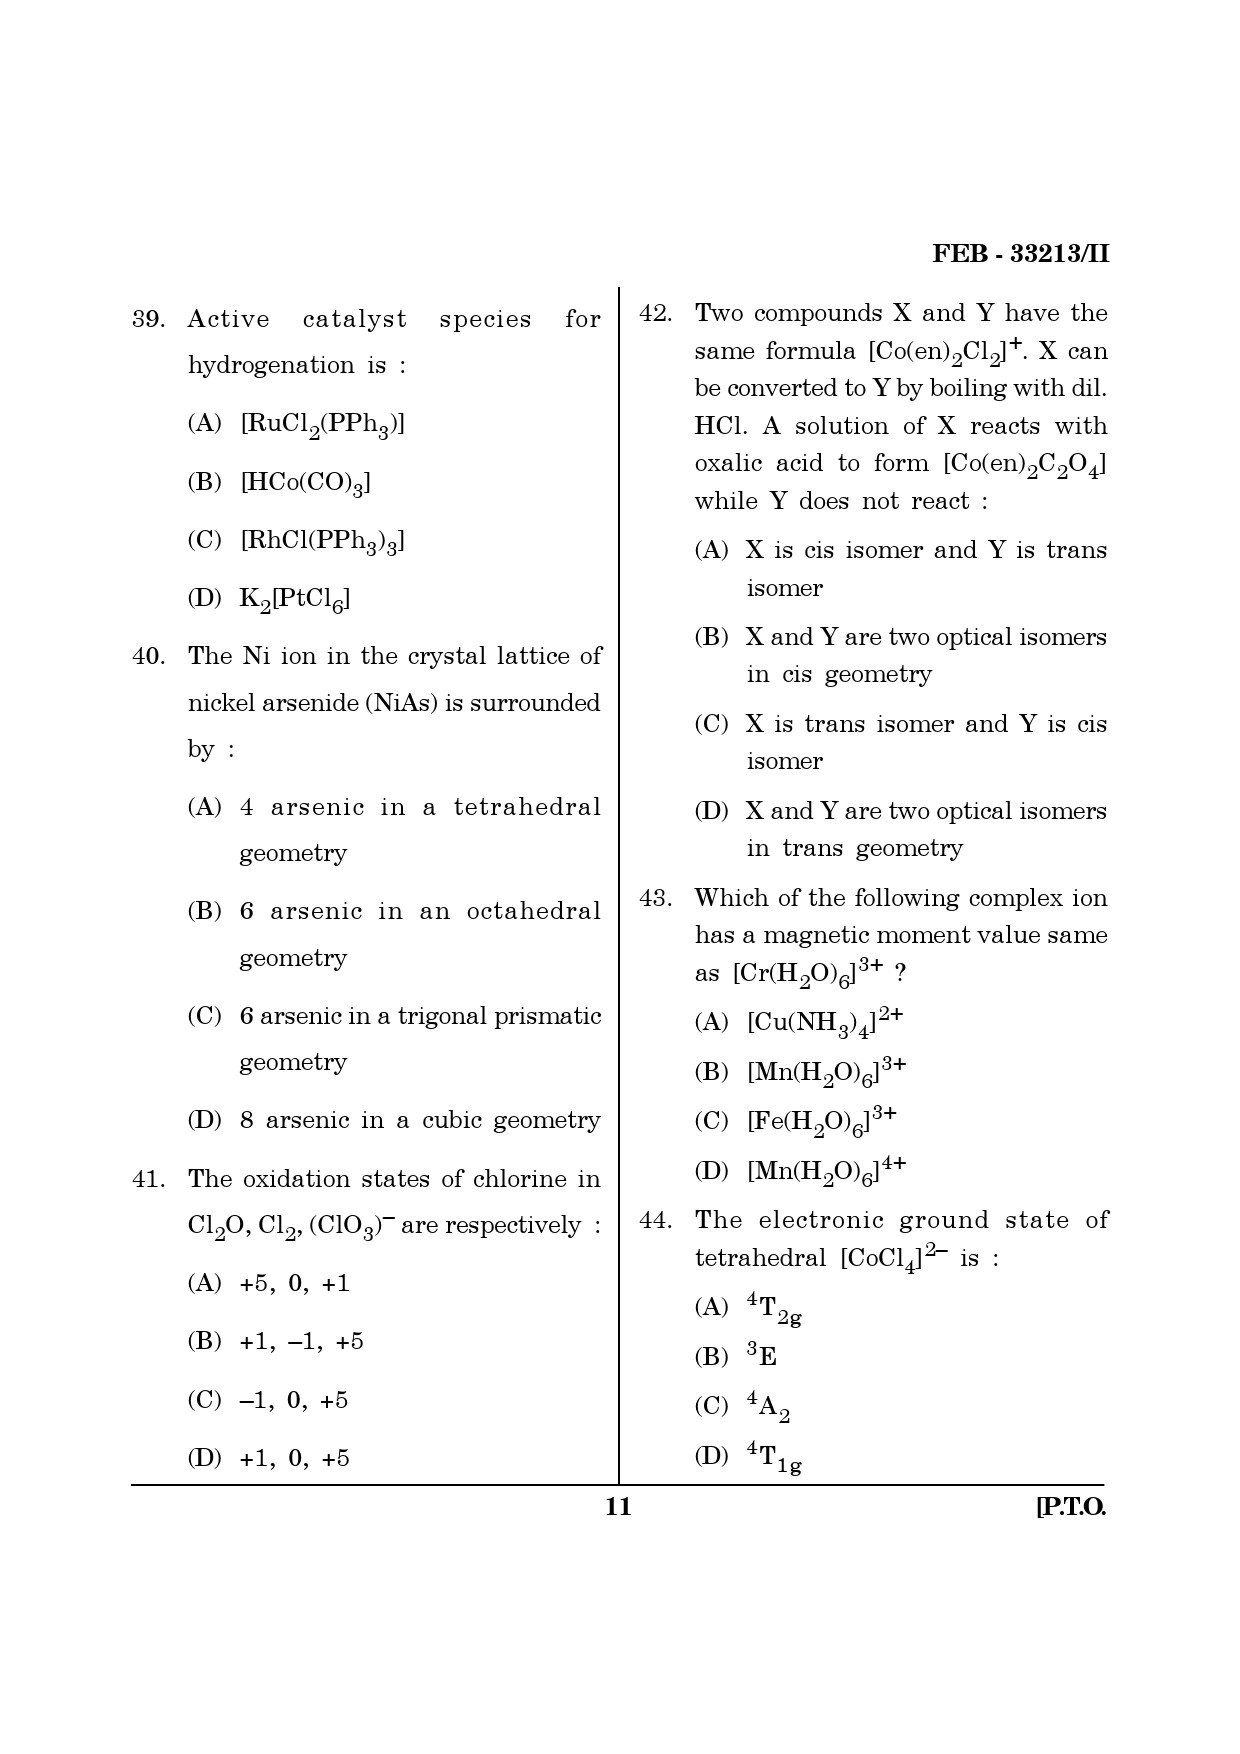 Maharashtra SET Chemical Sciences Question Paper II February 2013 11